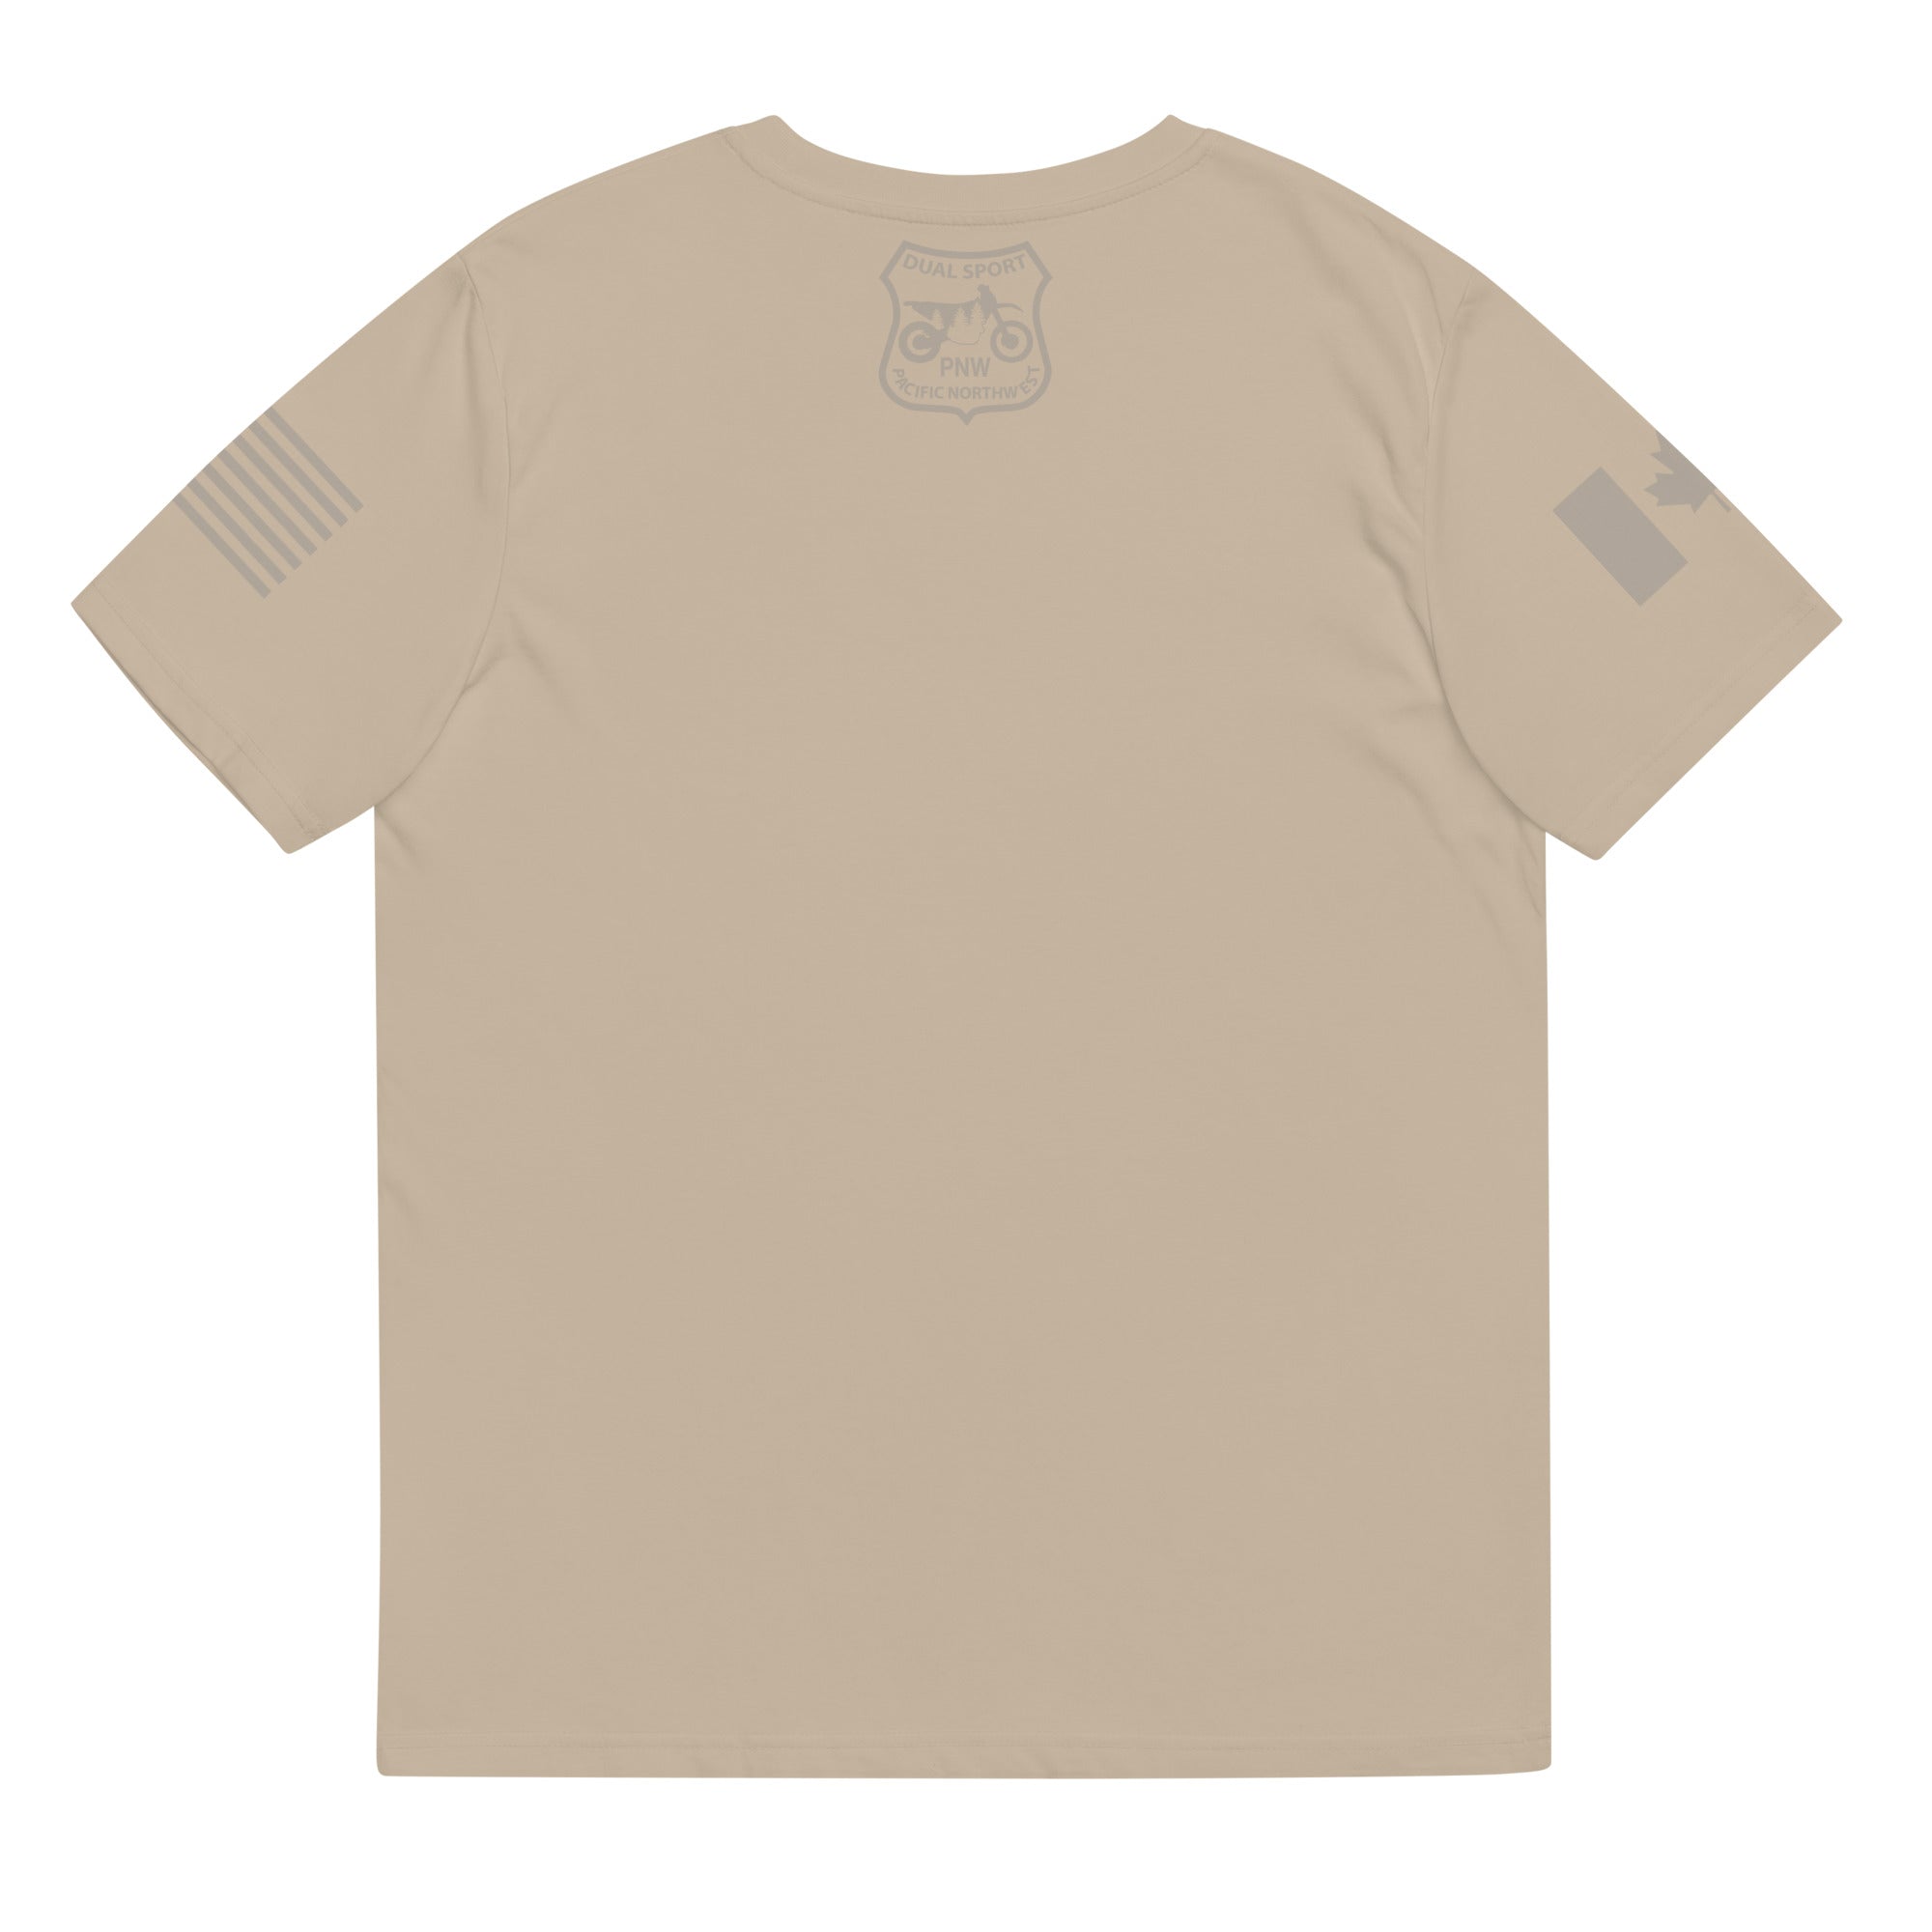 TactiCool Shirt, Sand